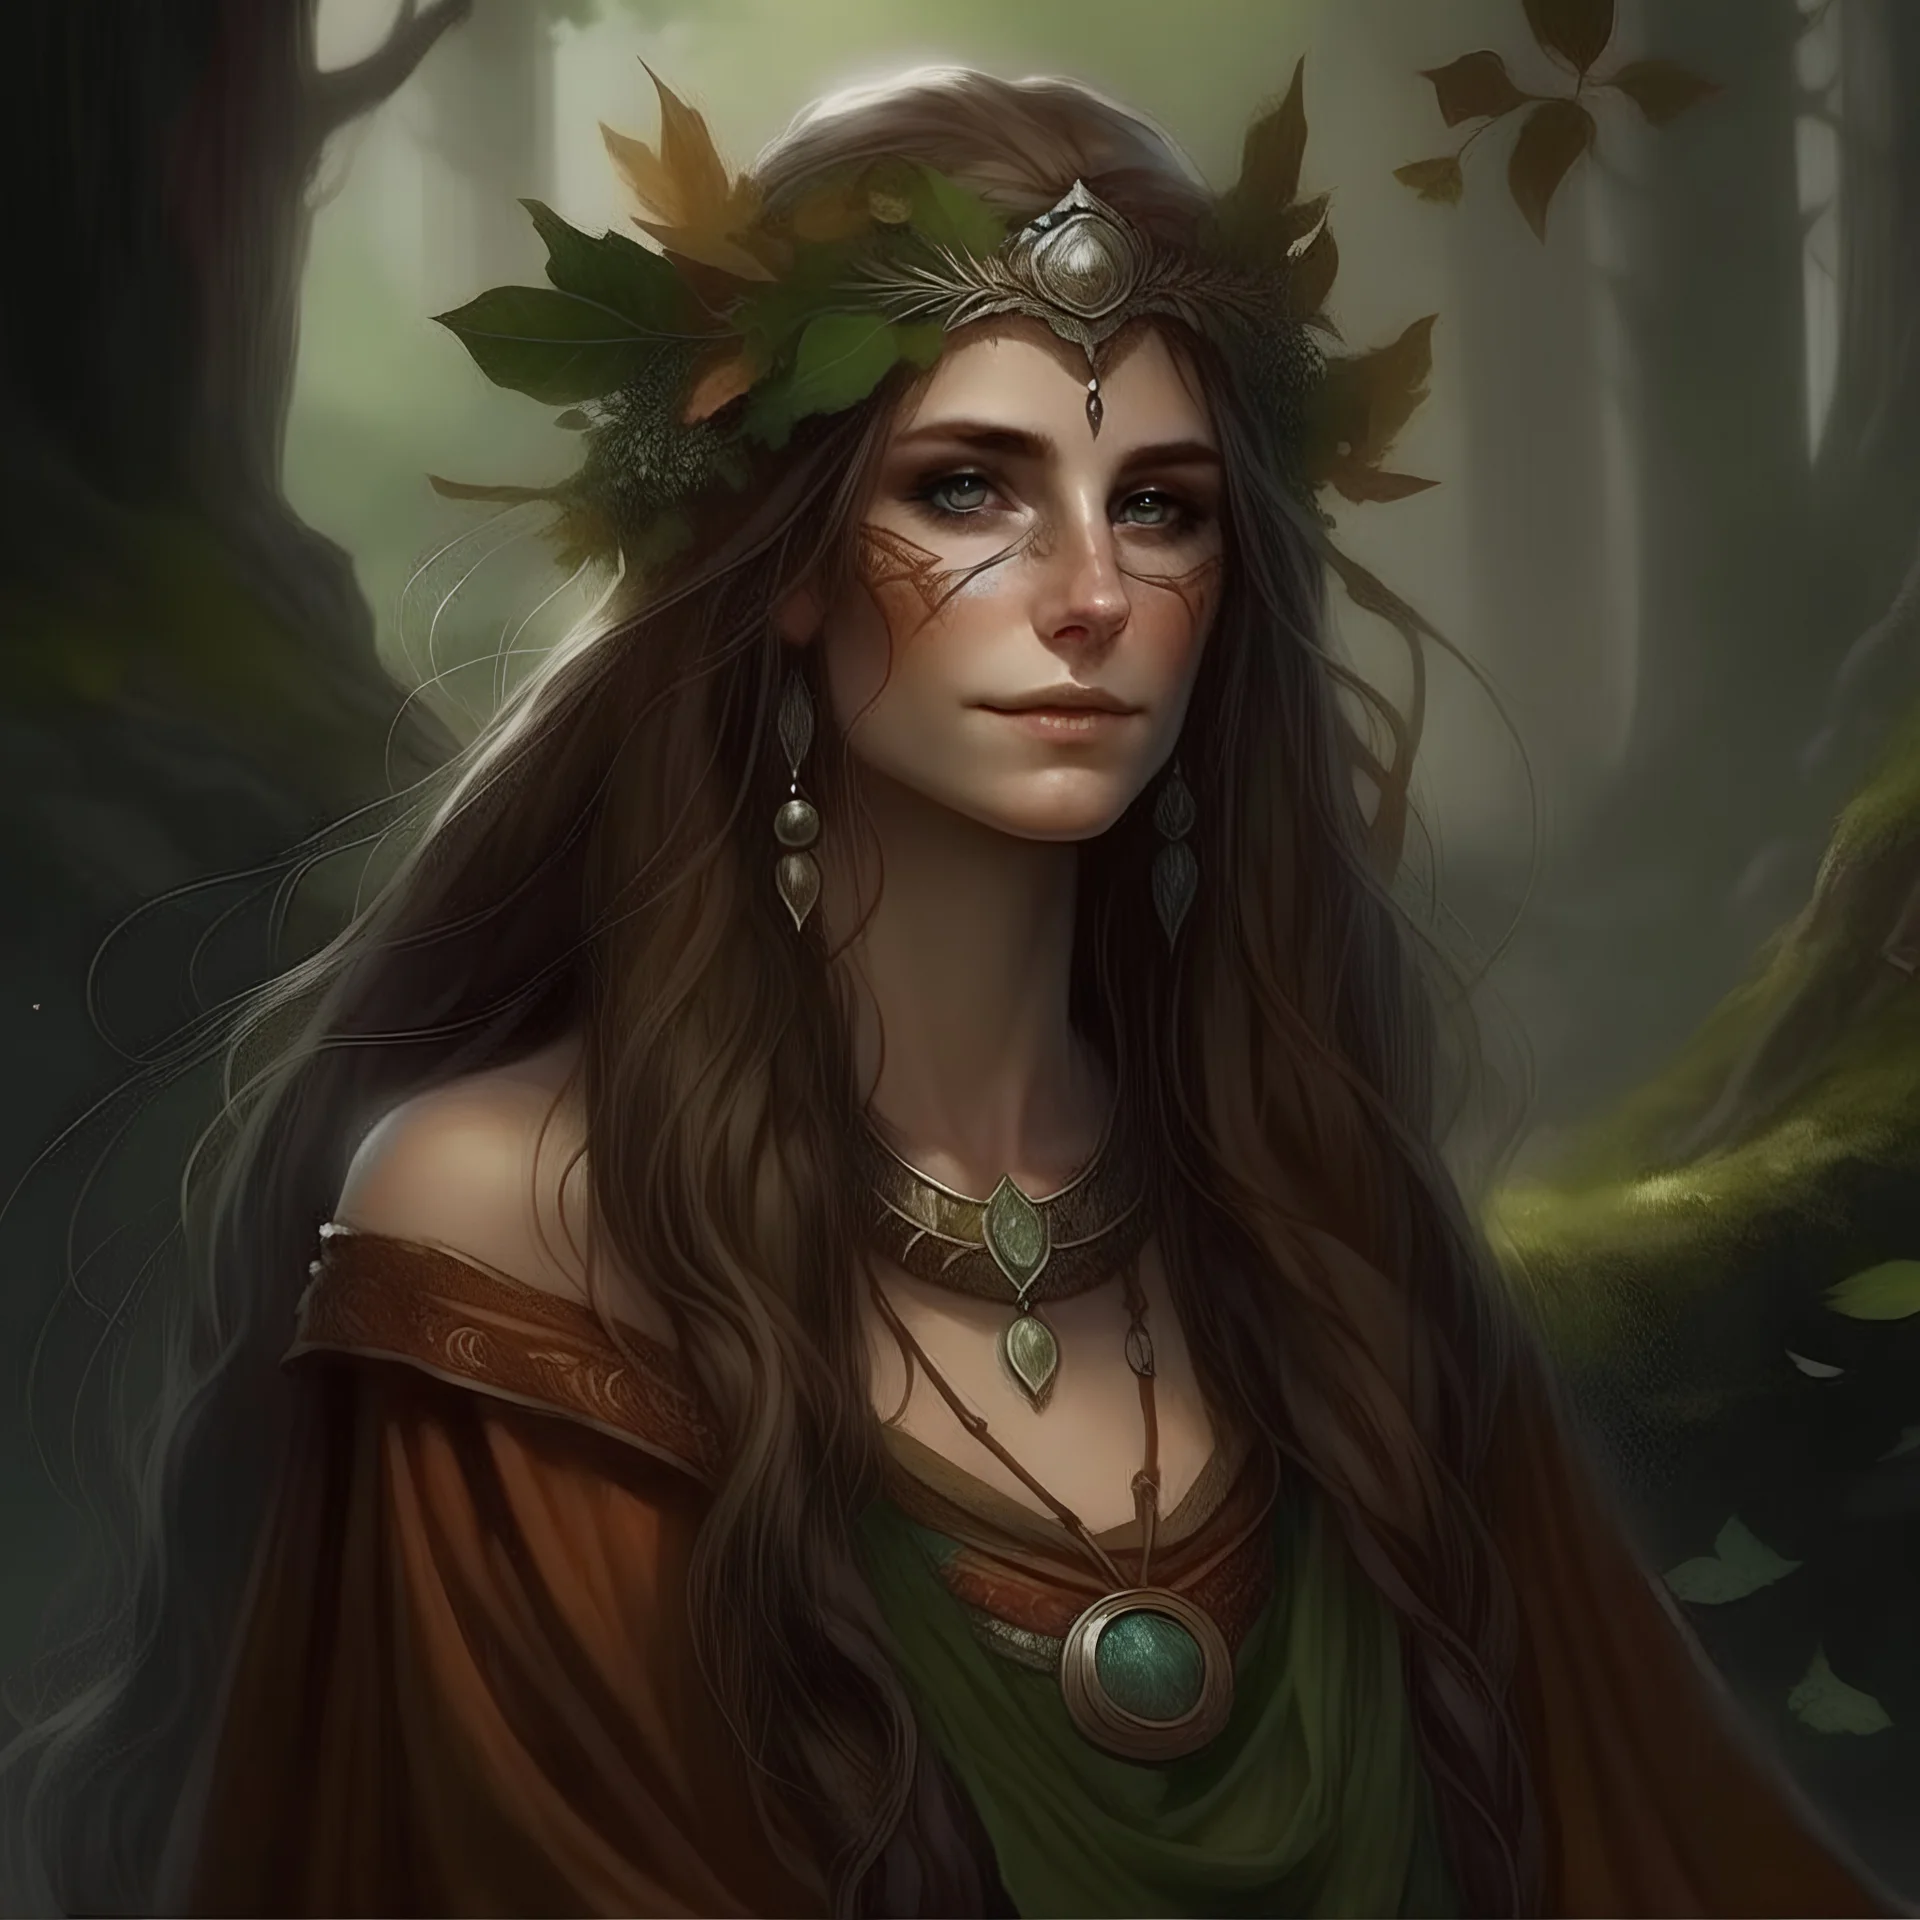 Beautiful druid woman